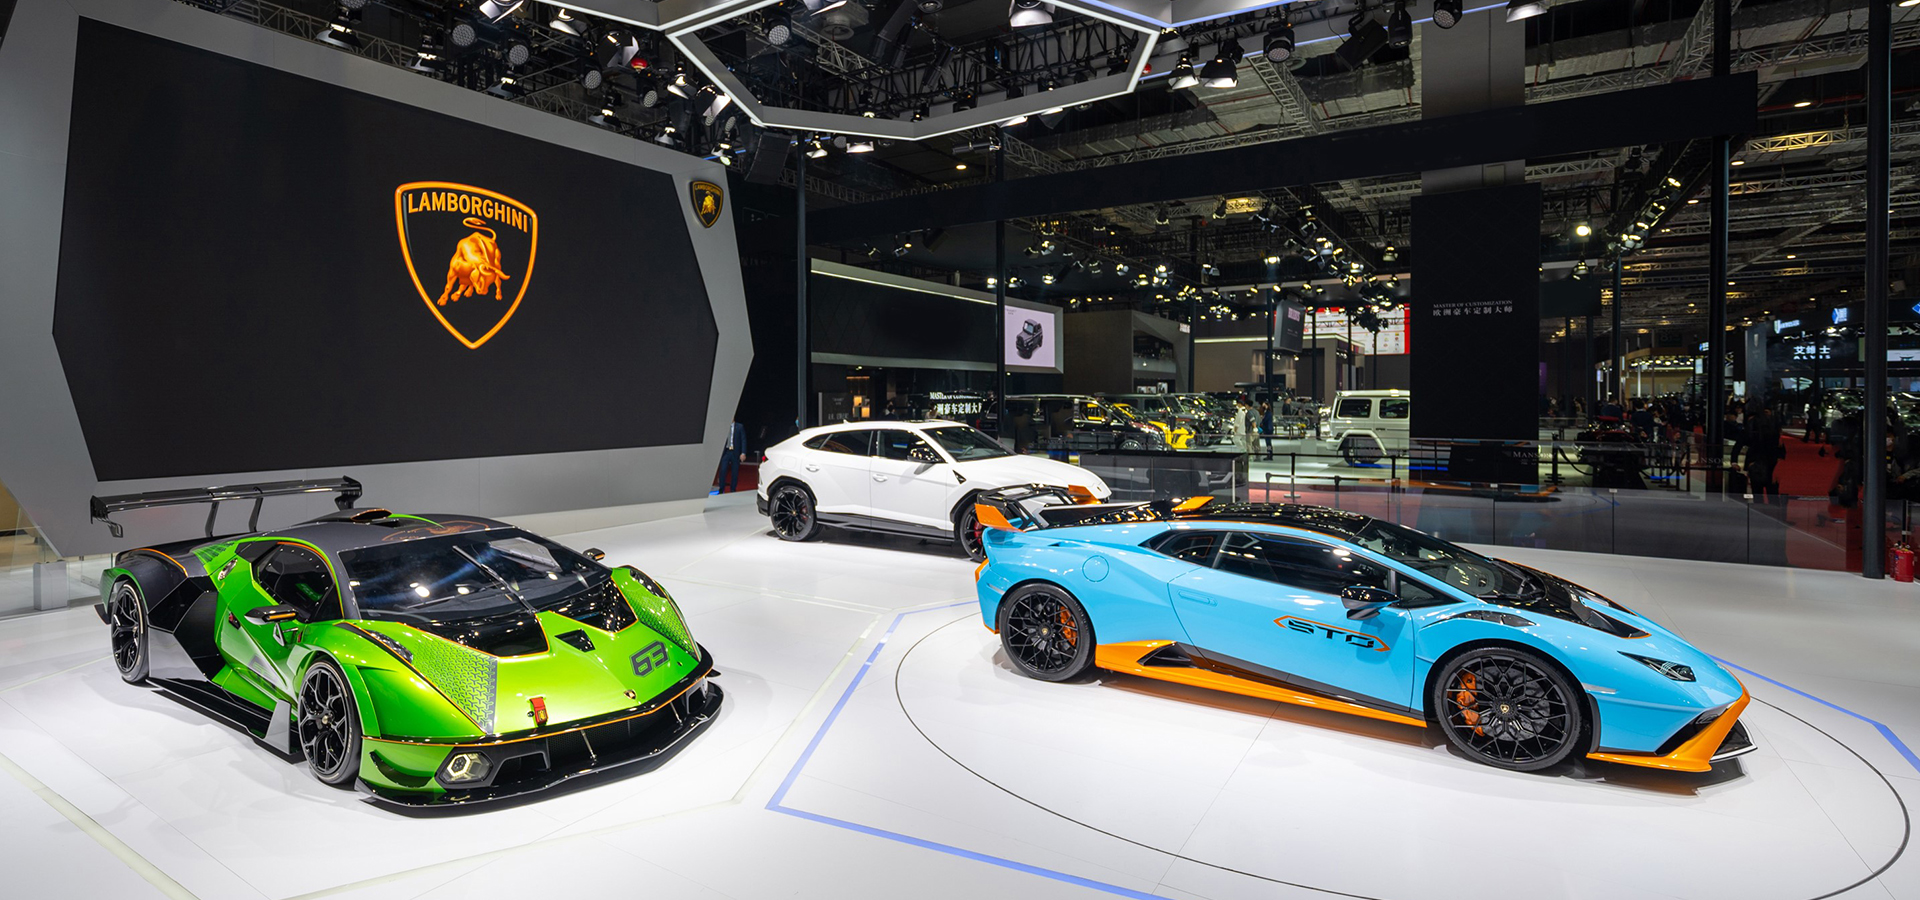 Shanghai Motor Show 2021: preview of three Lamborghinis